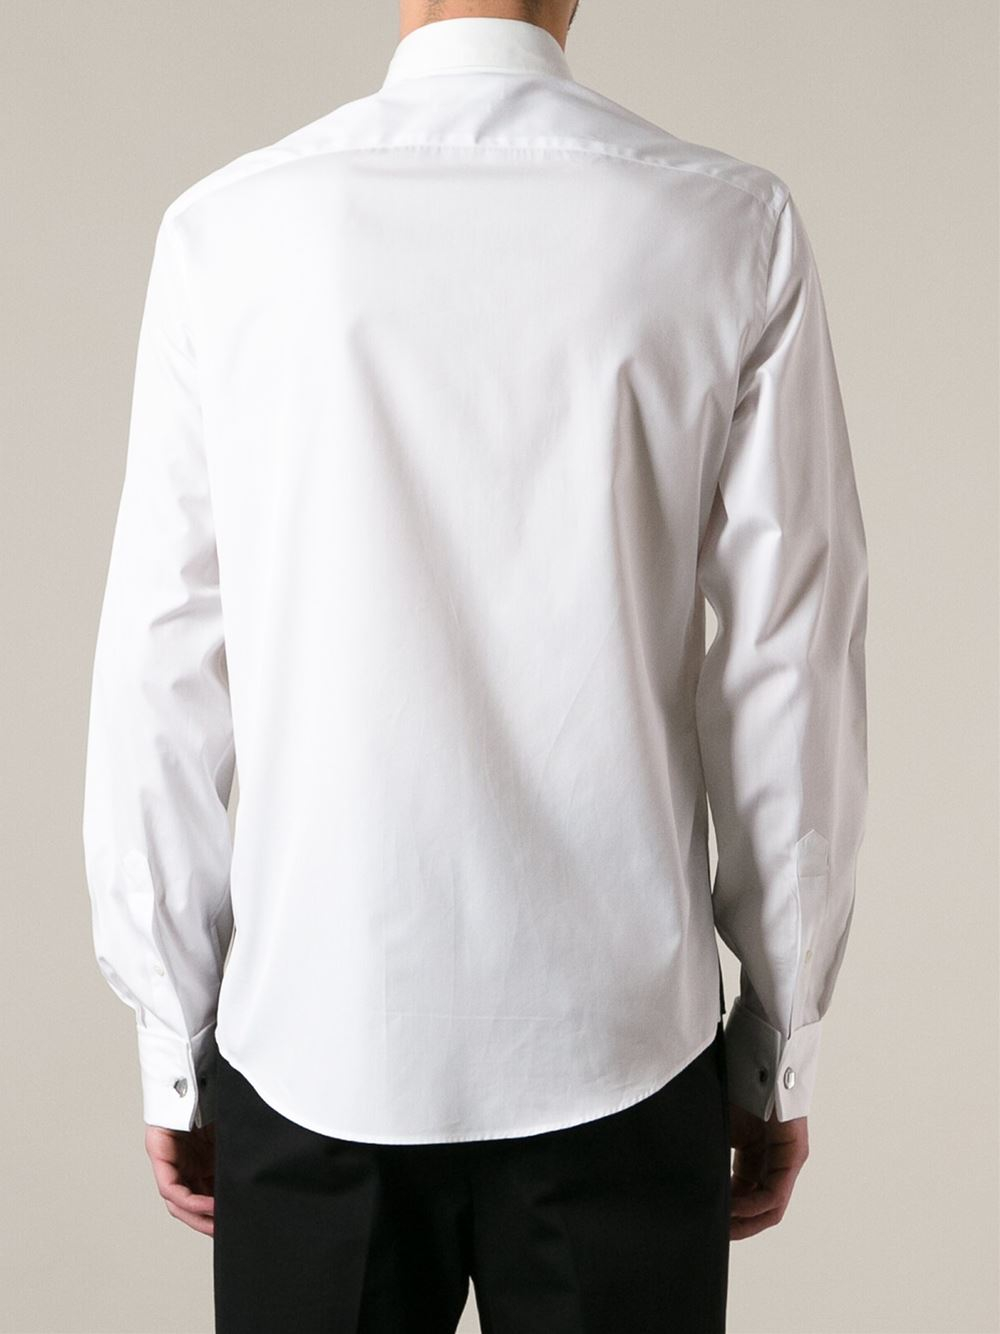 Lyst - Alexander Mcqueen Printed Shirt in White for Men